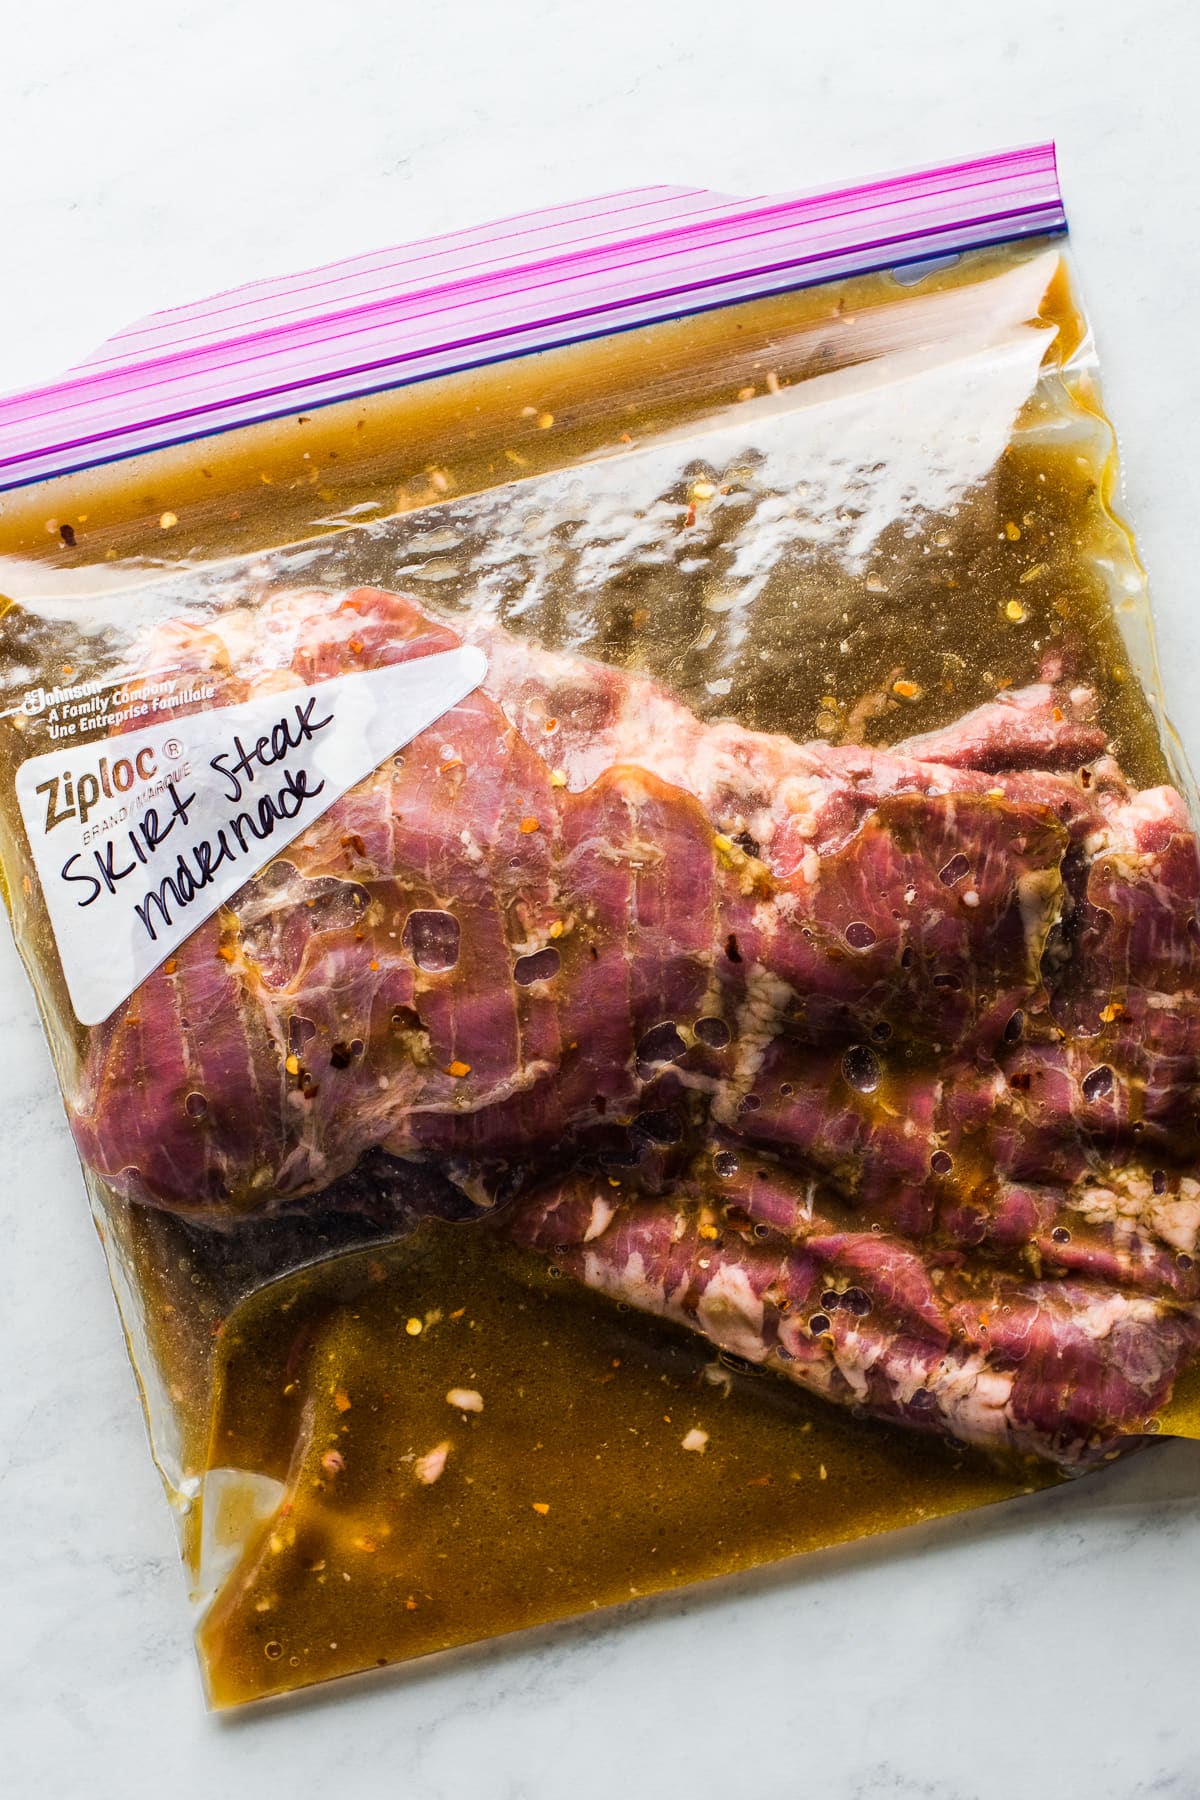 Skirt steak marinade in a plastic ziploc bag ready to go in the fridge.